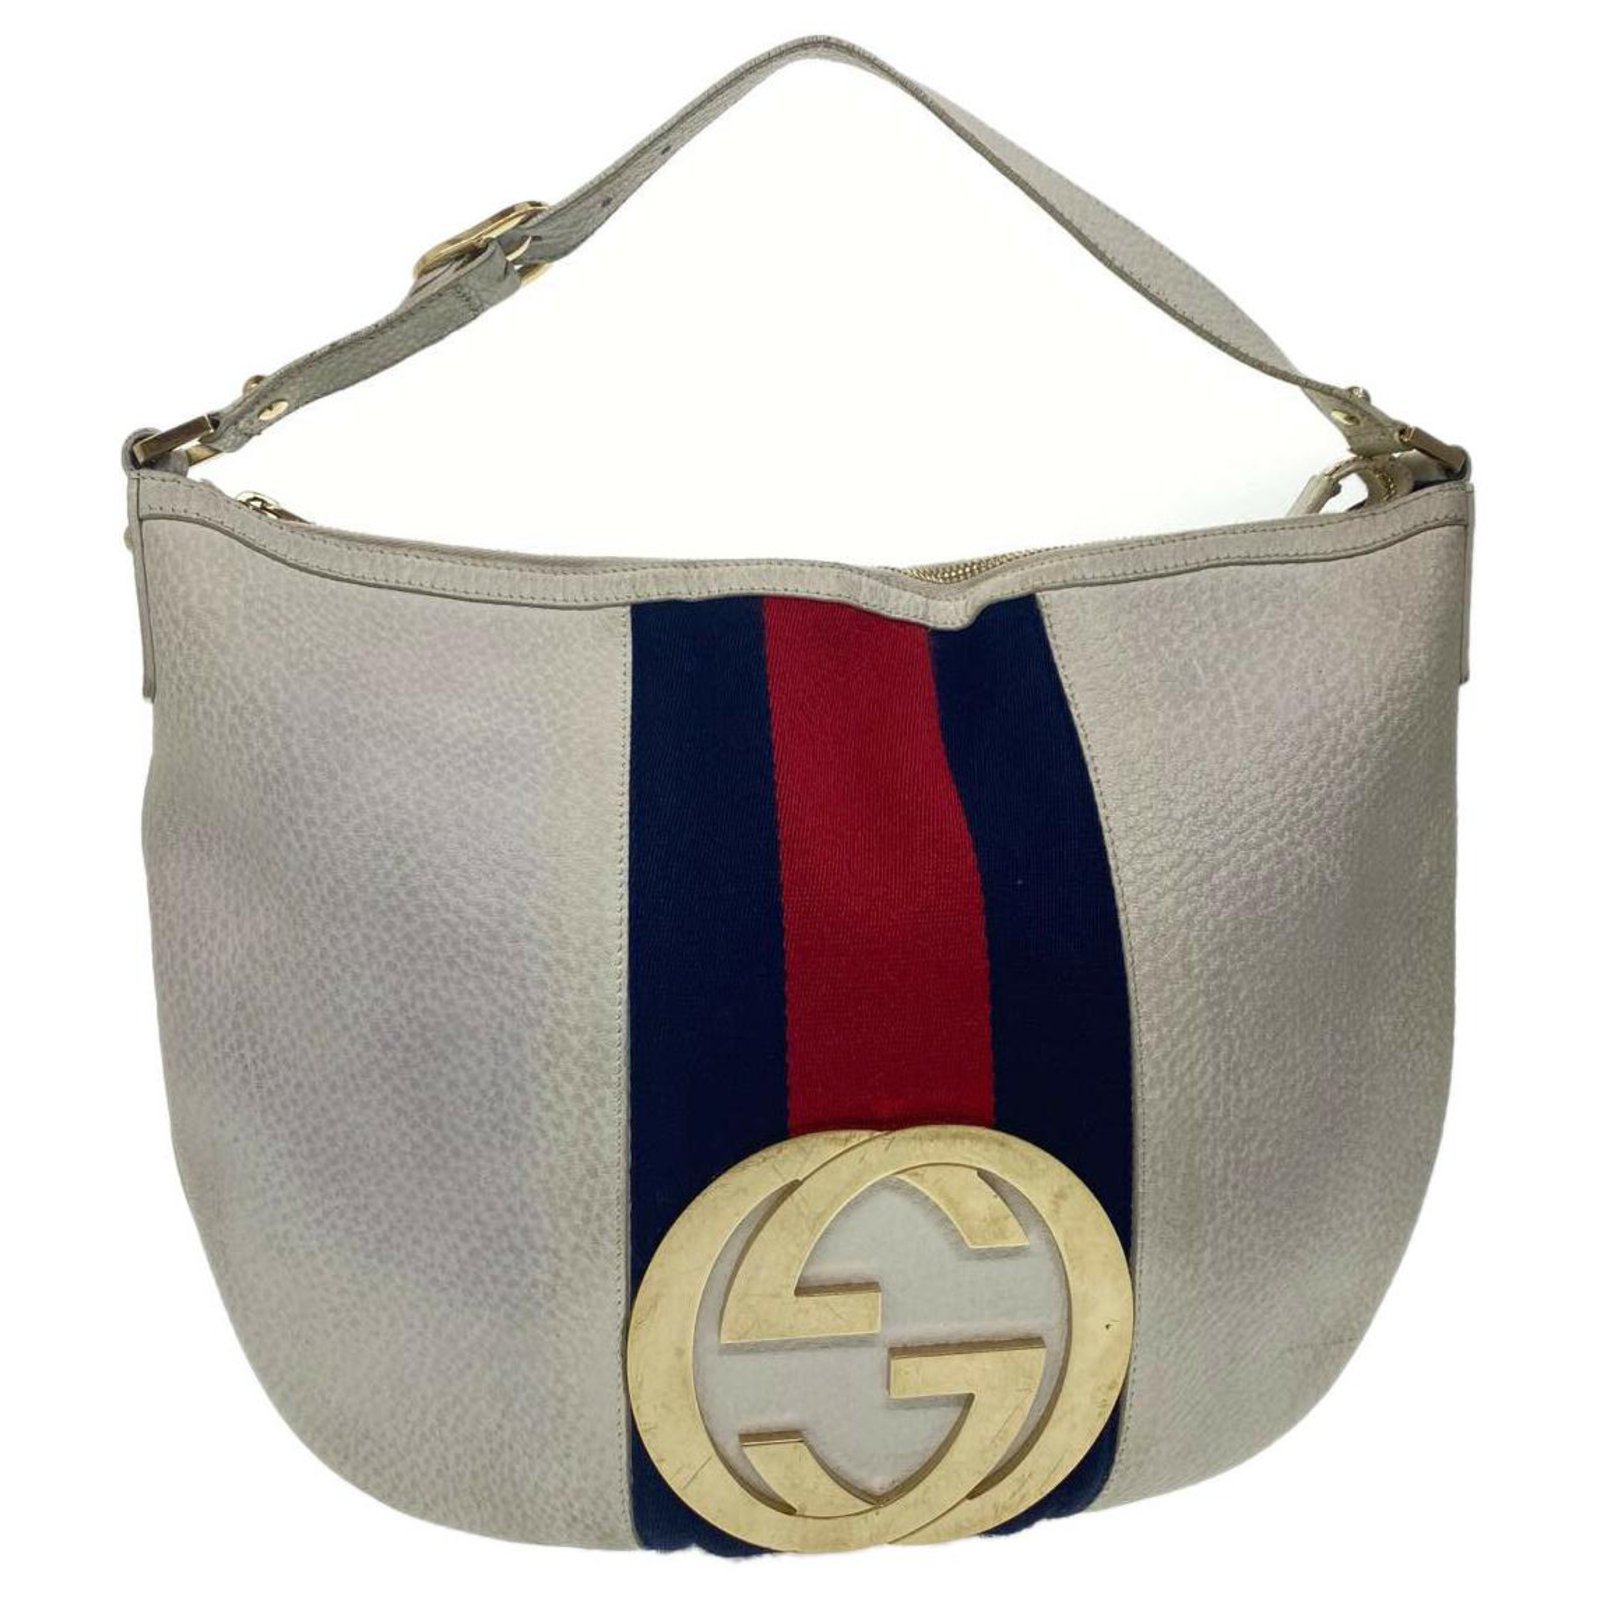 Gucci Gucci handbag Handbags Leather 